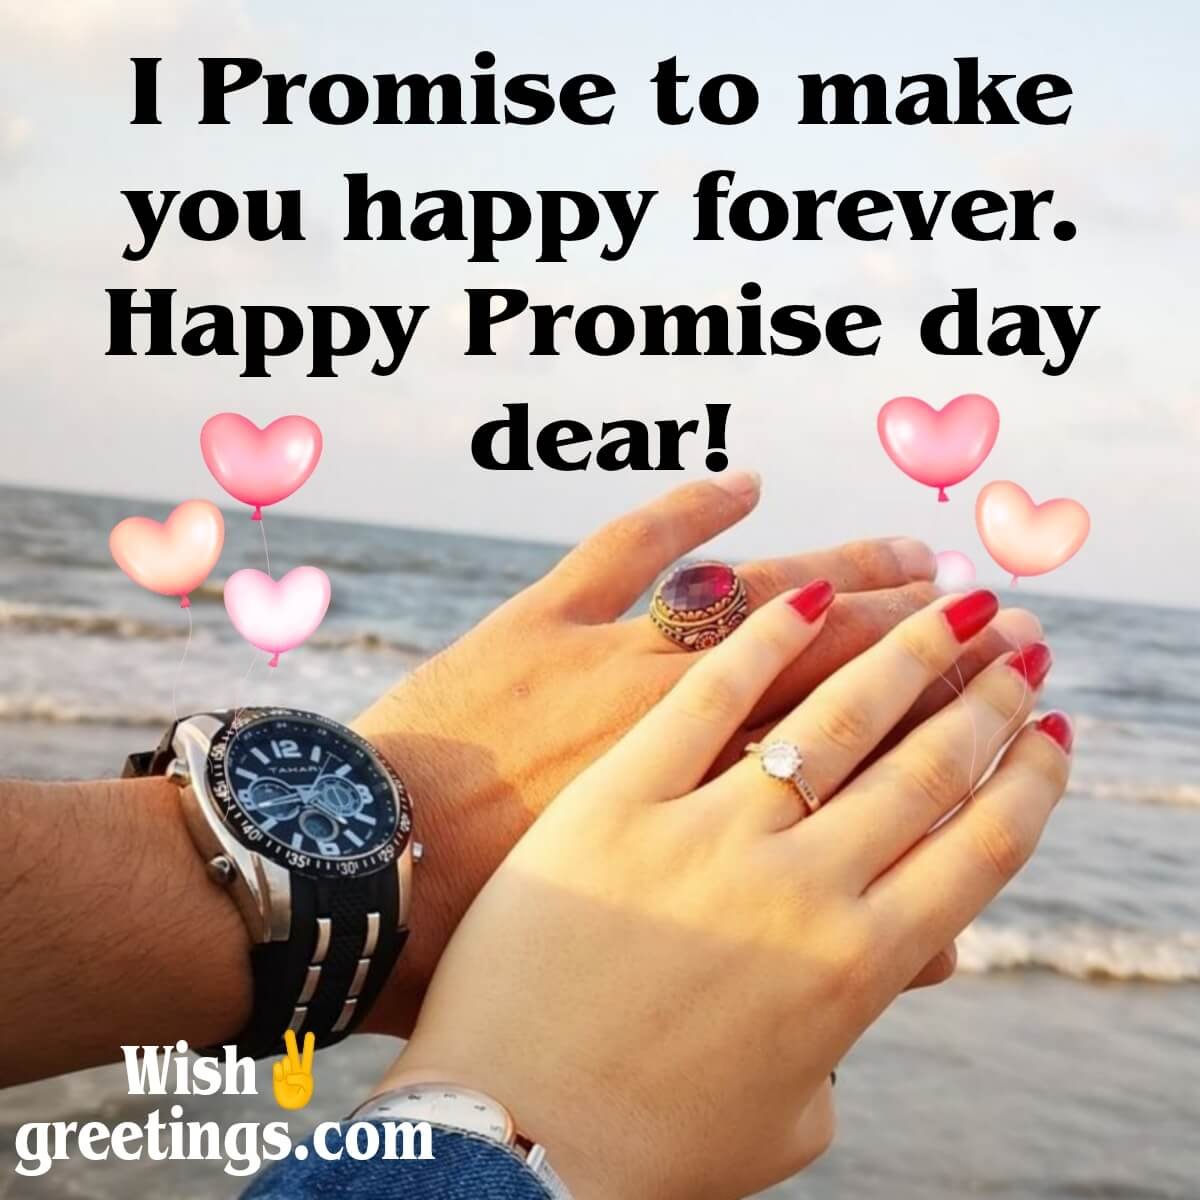 Happy Promise Day Dear